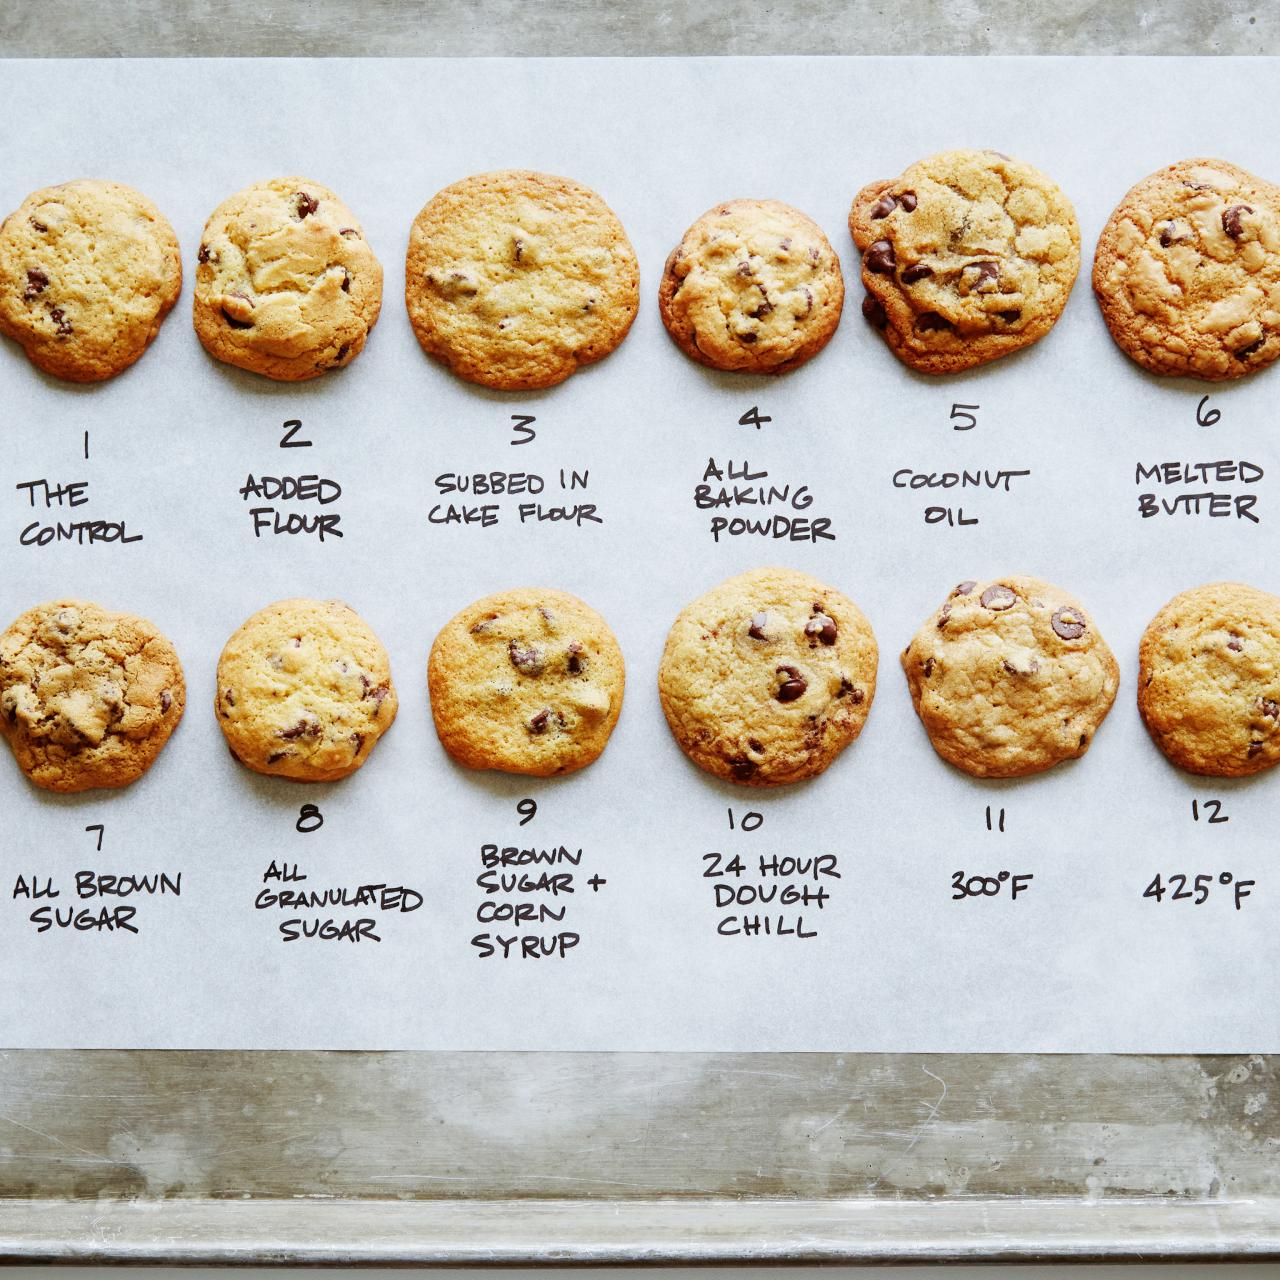 10 Common Cookie Storage Mistakes